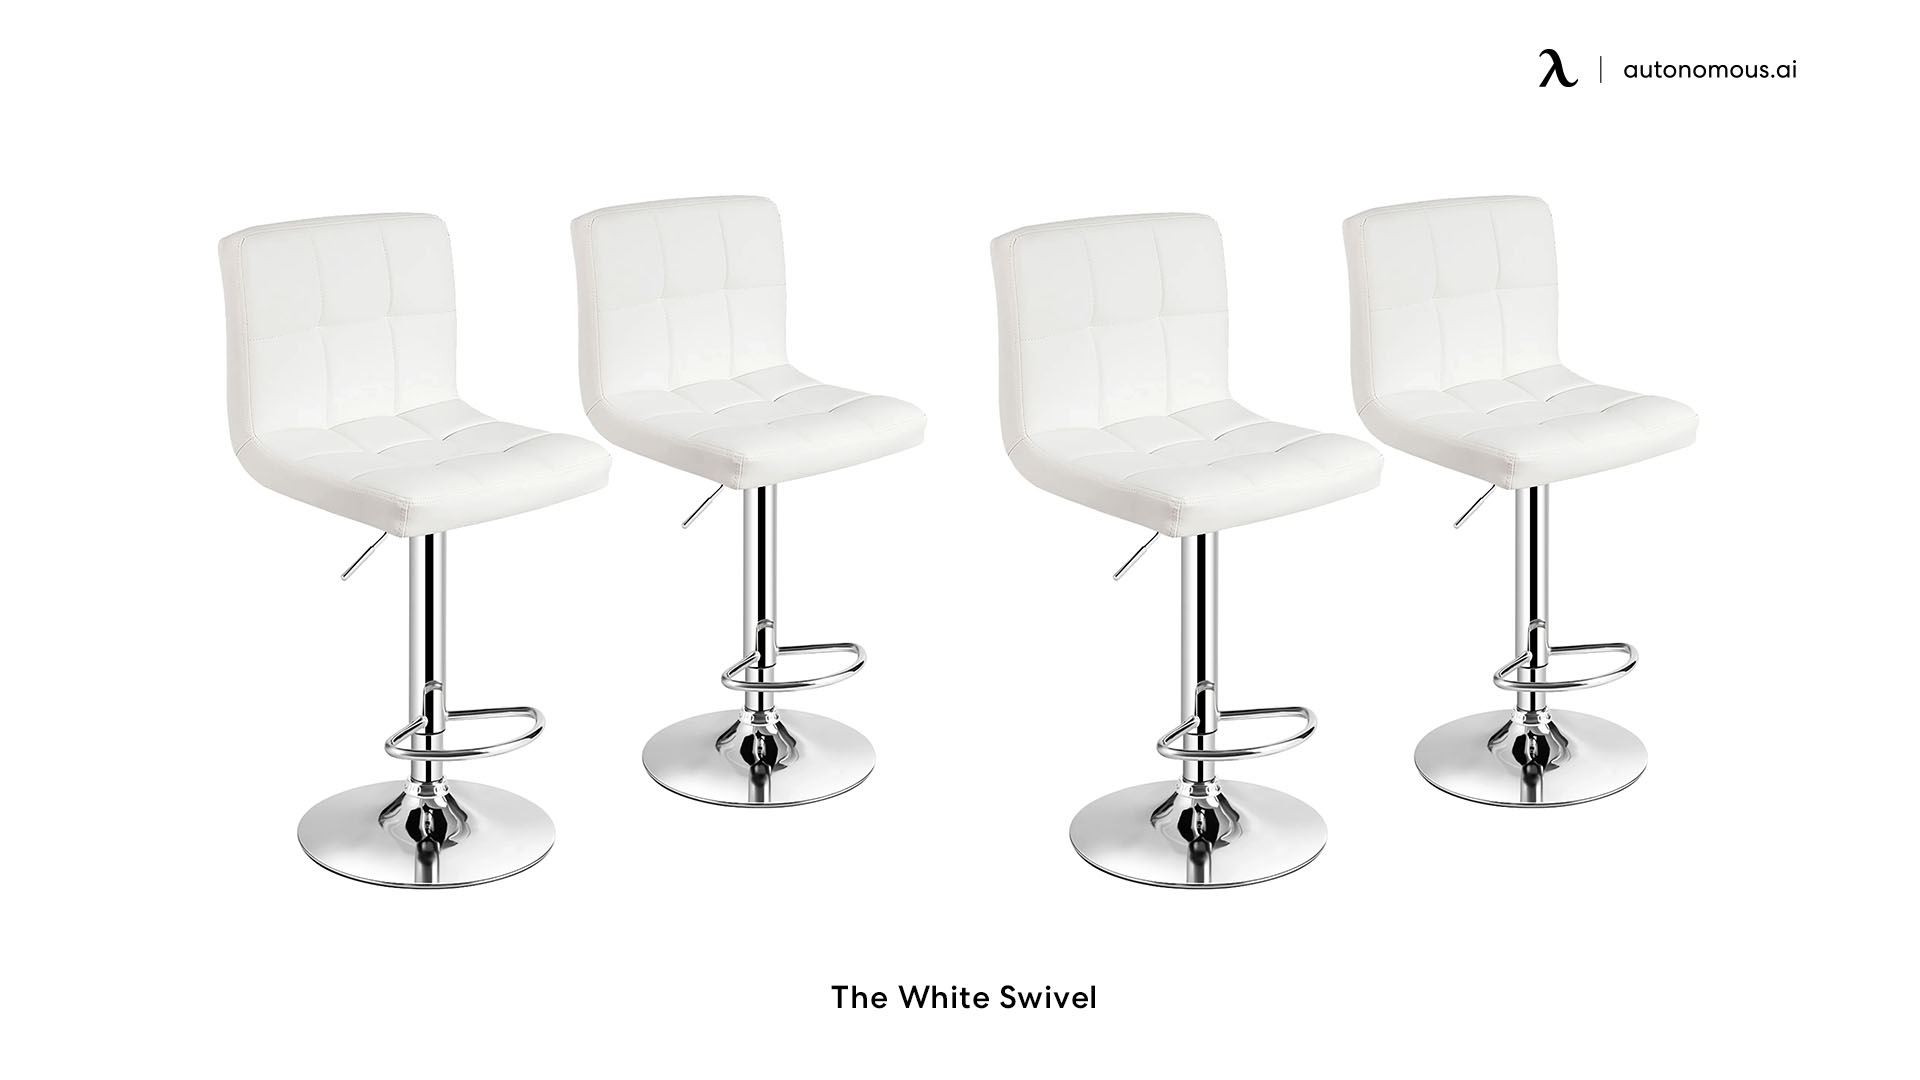 The White Swivel ergonomic stool chair